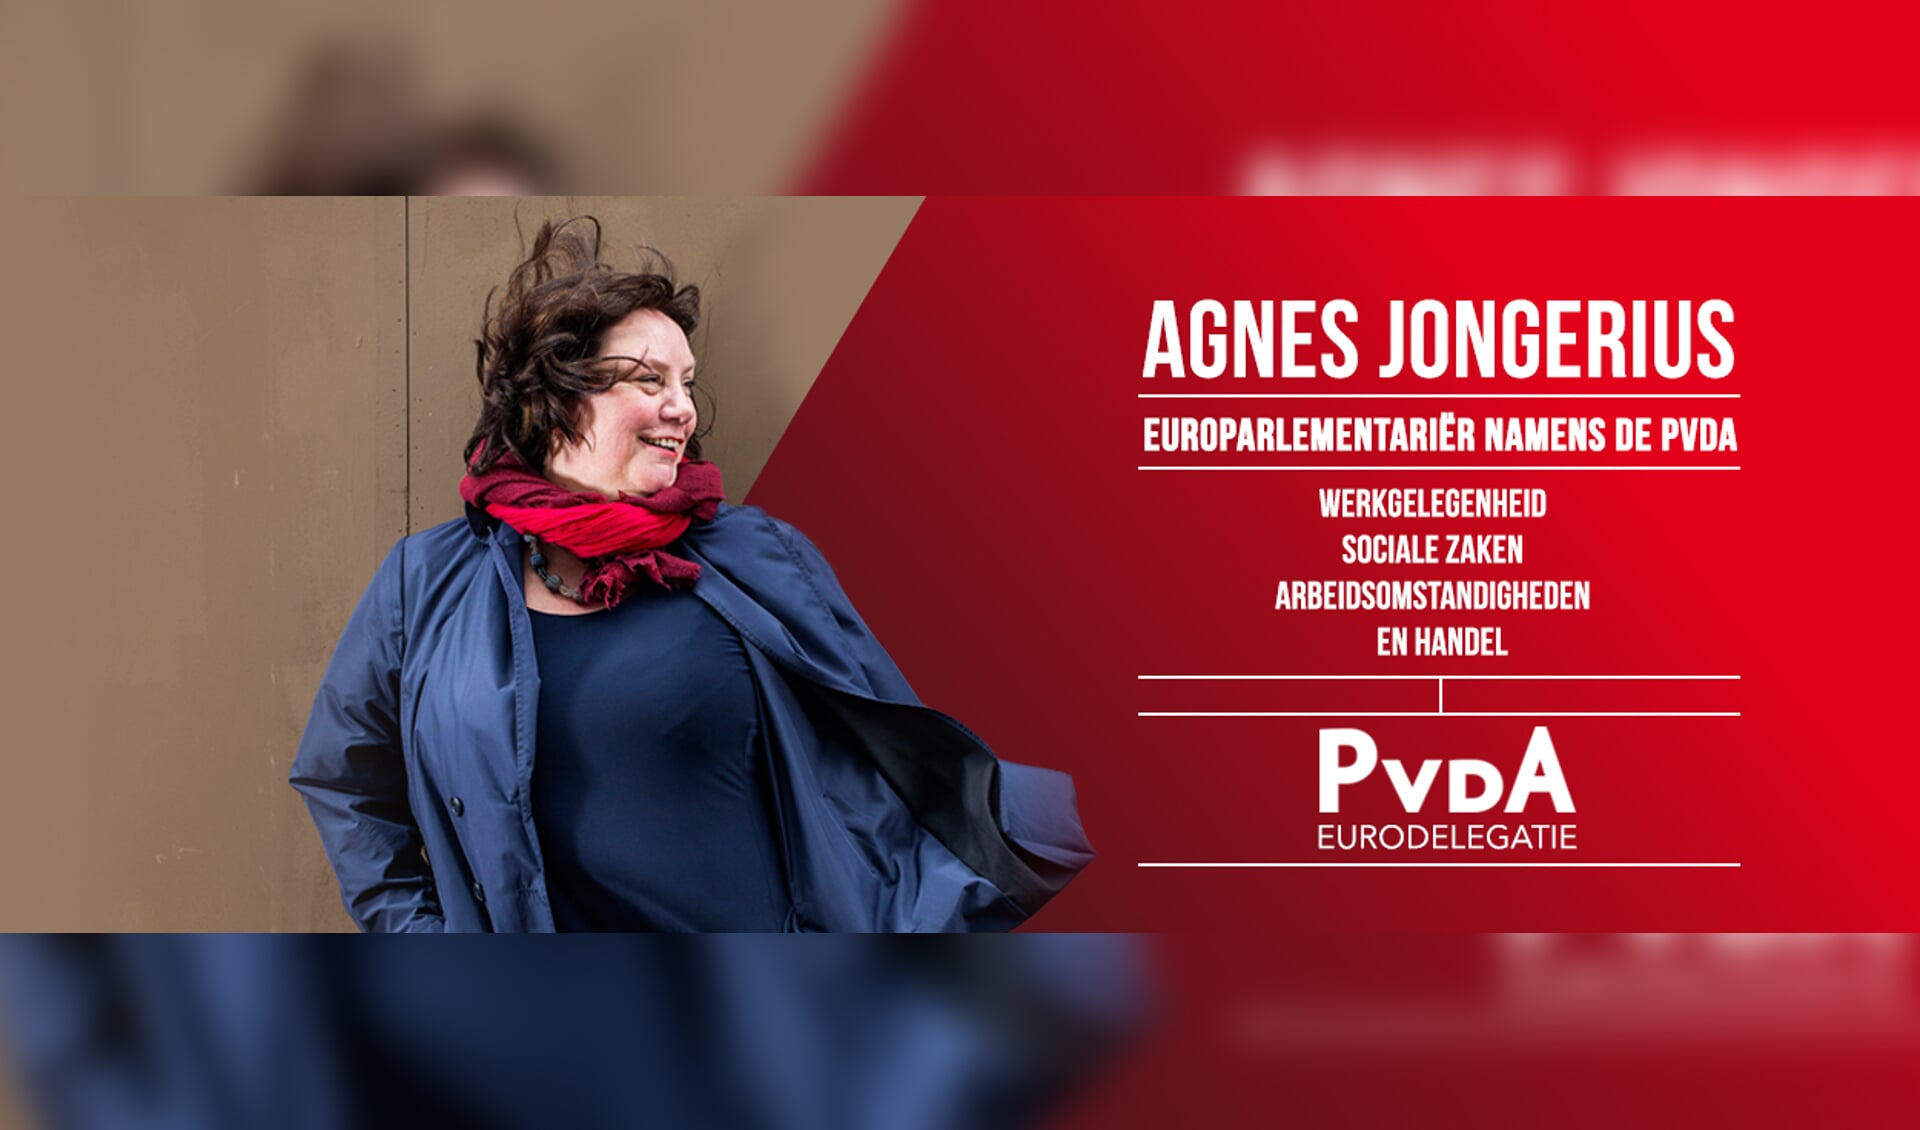 Agnes Jongerius